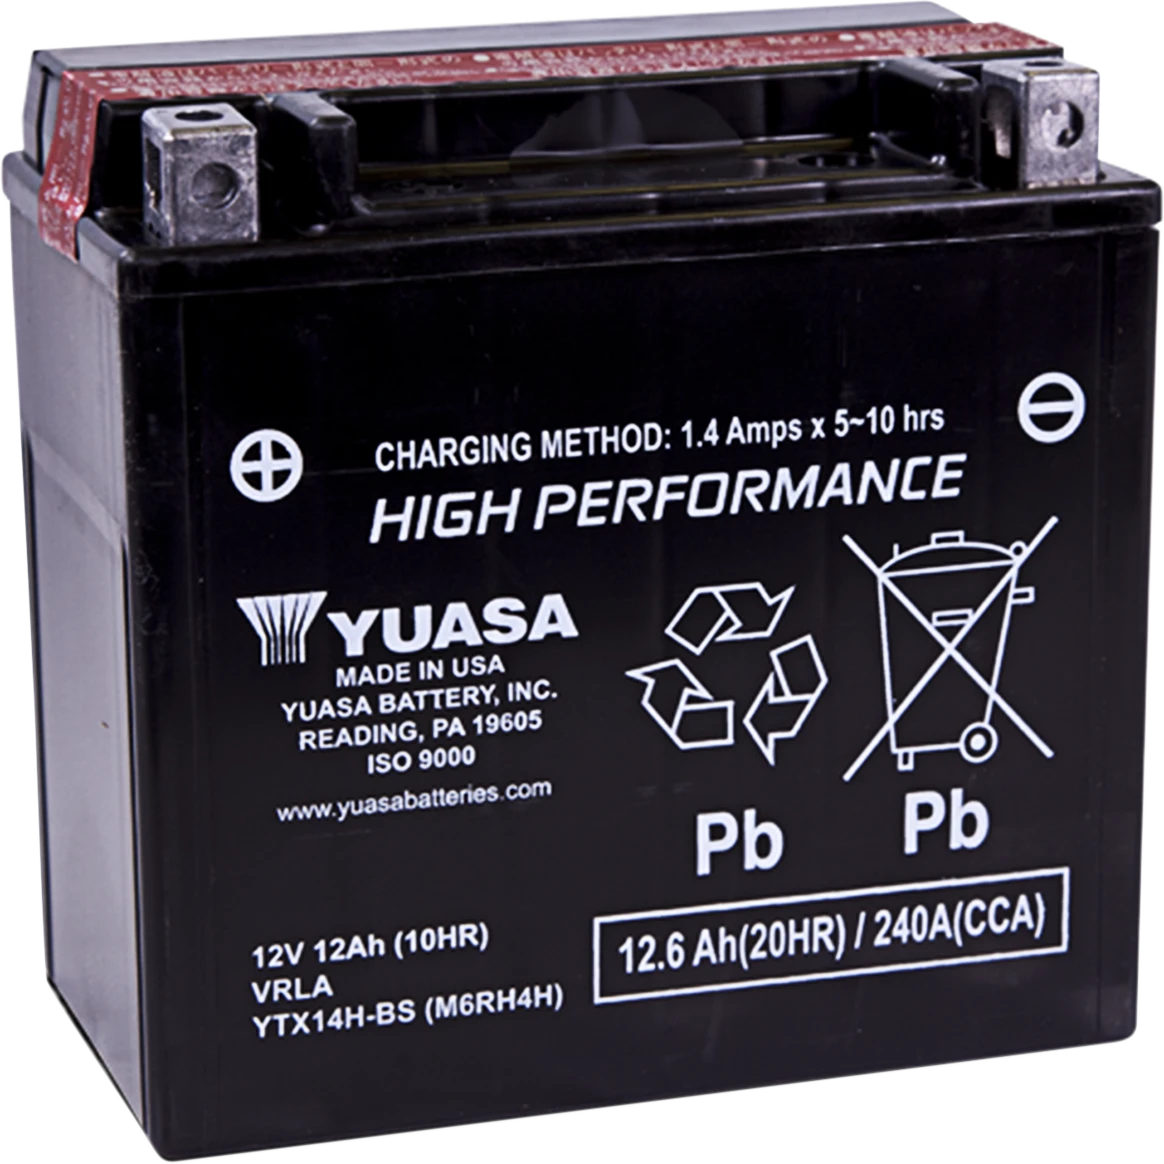 YUASA High Performance AGM Maintenance-Free Battery